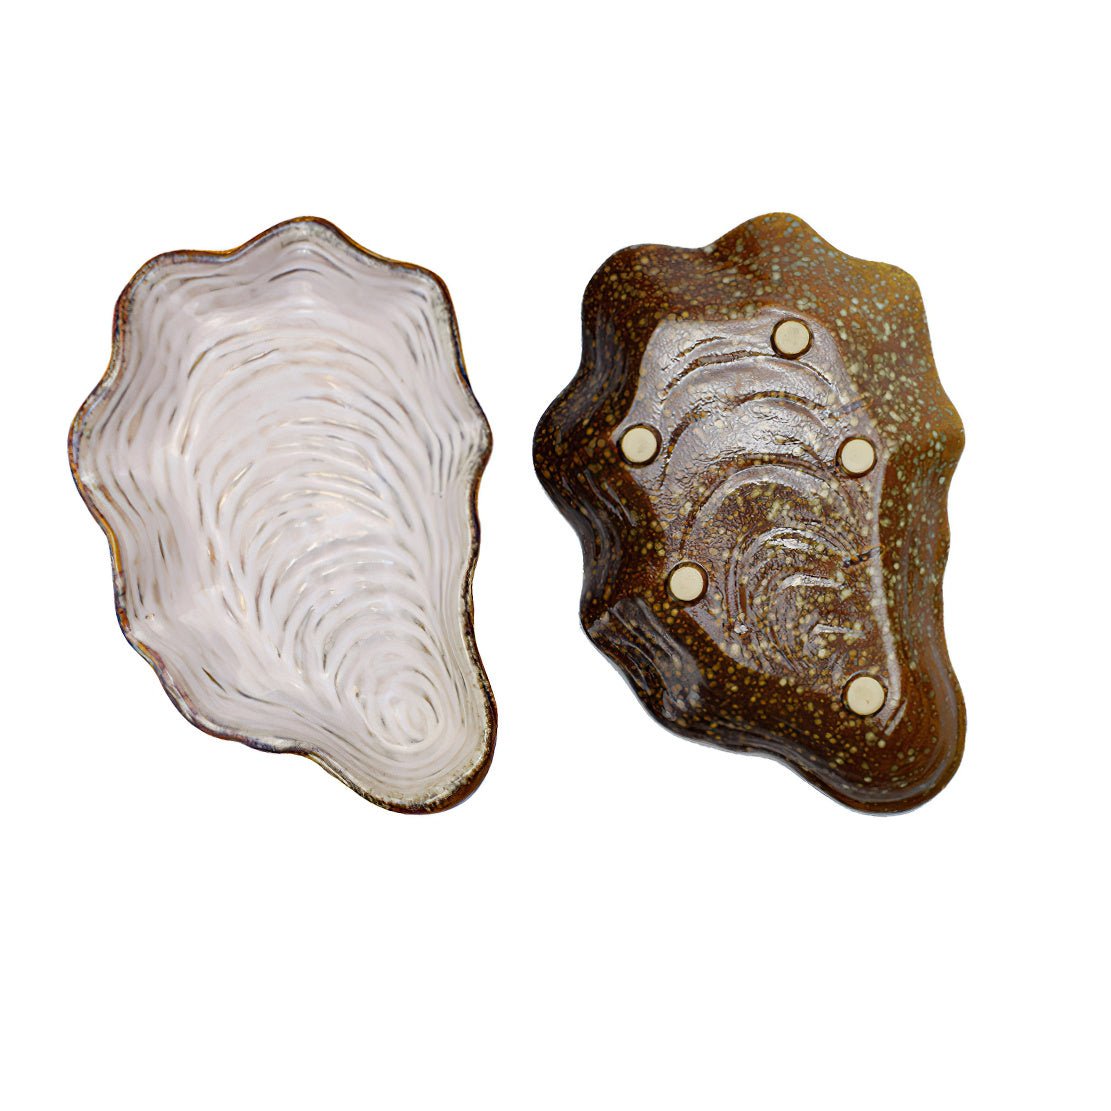 White & brown shell shape ceramic dish